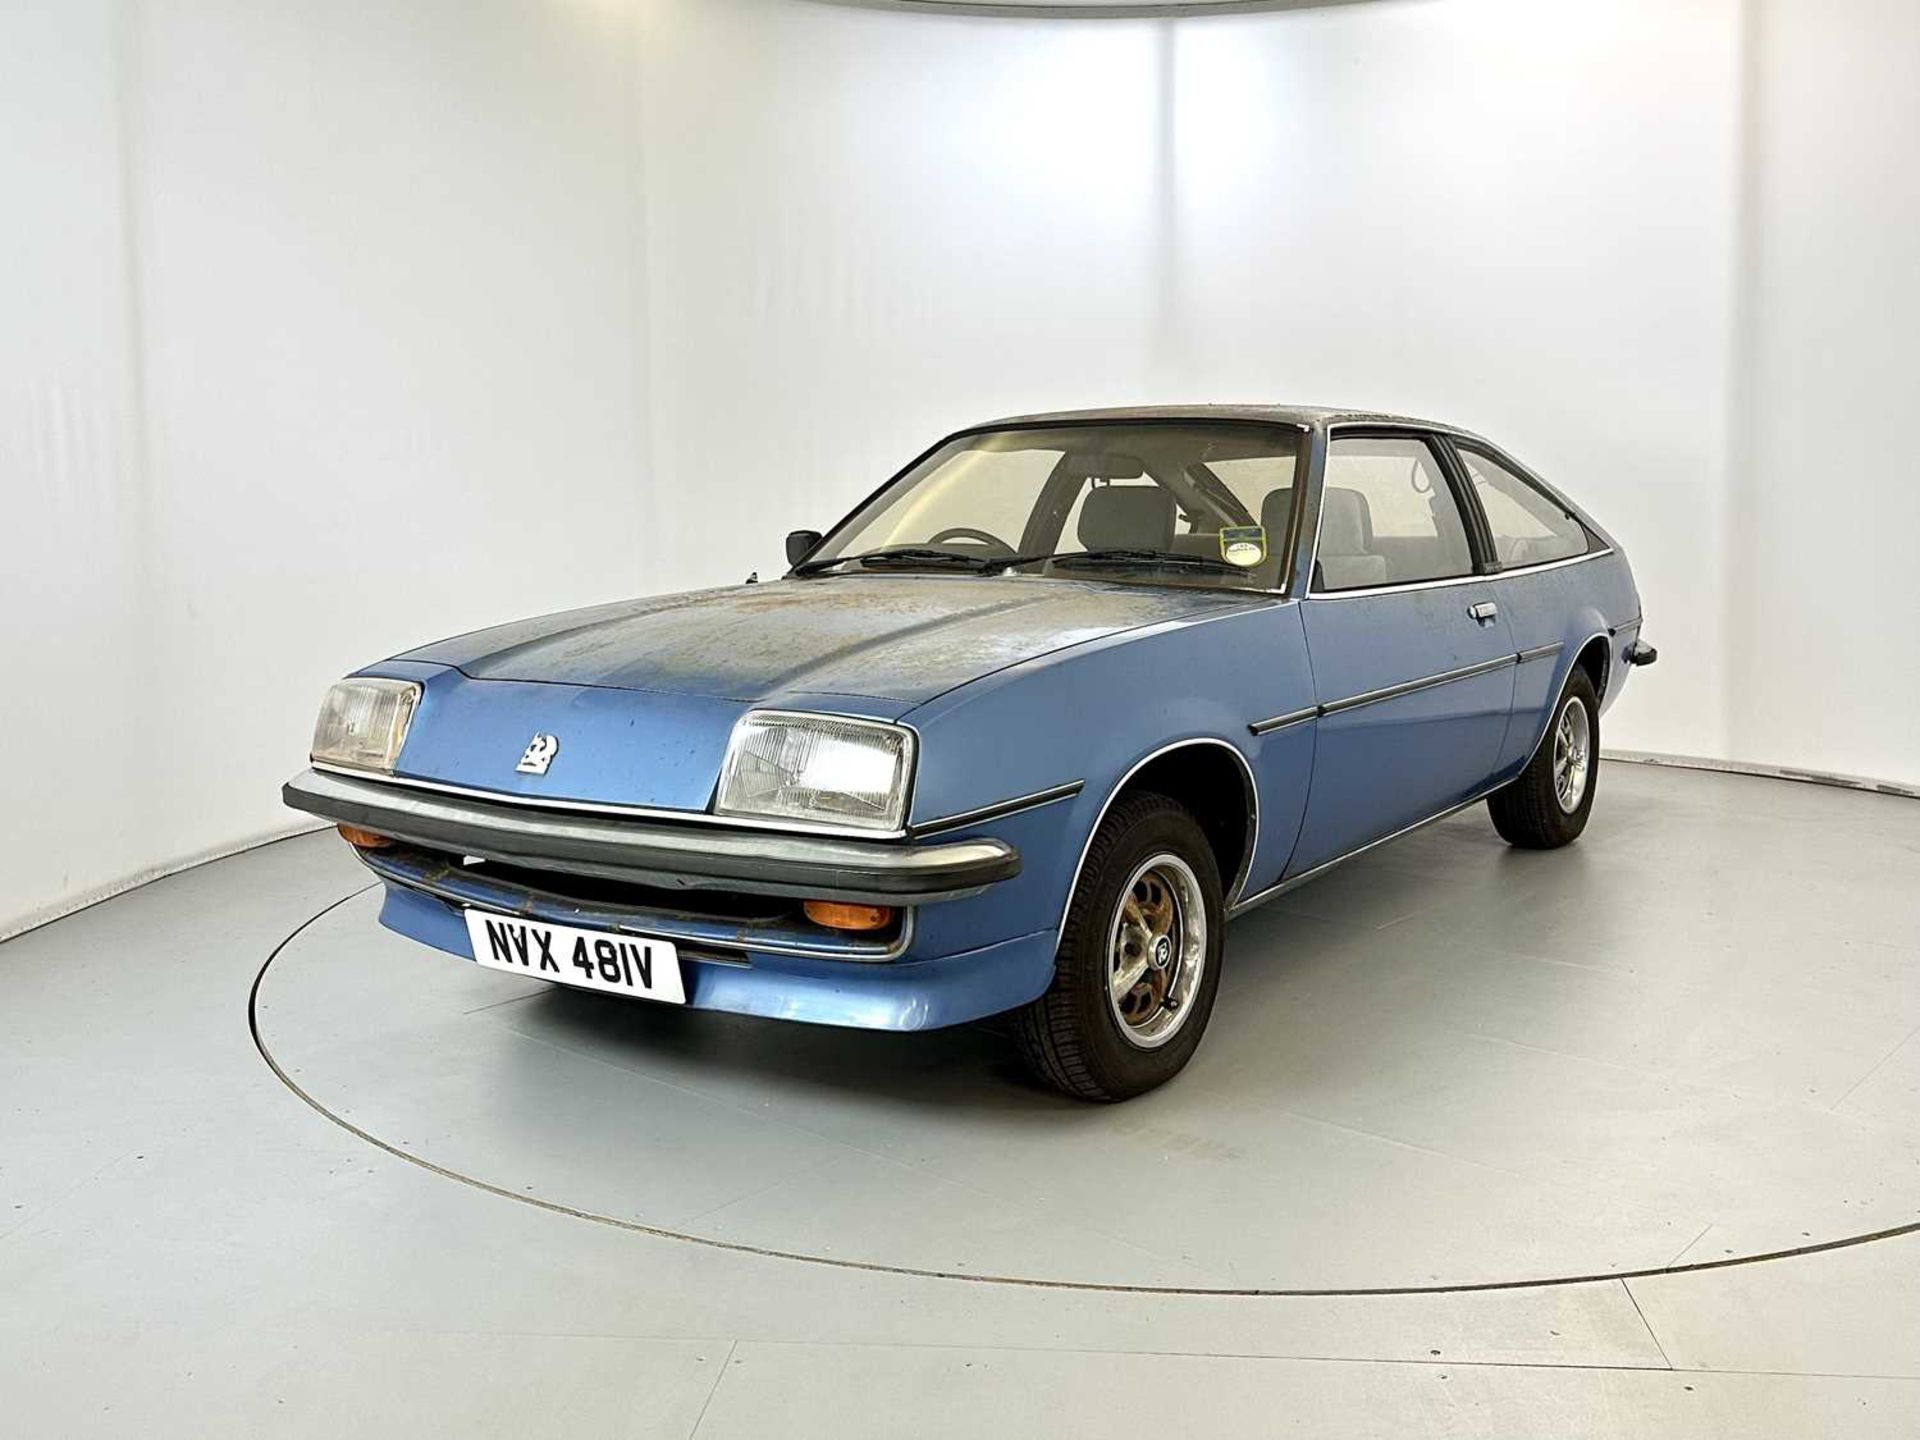 1980 Vauxhall Cavalier GLS Sports Hatch - Image 3 of 28